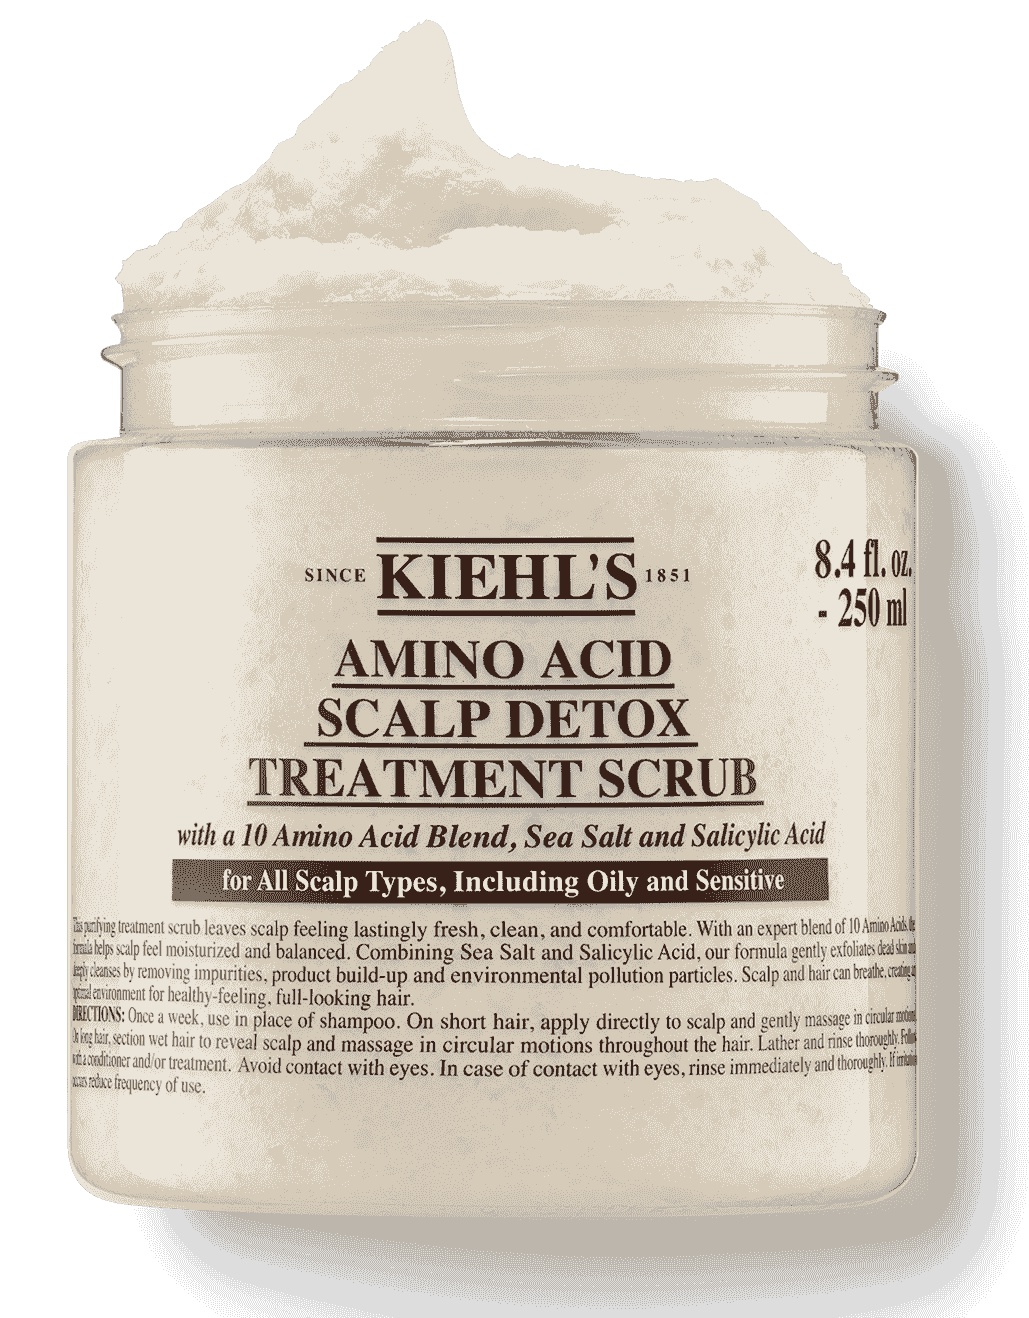 Kiehl’s Amino Acid Scalp Detox Treatment Scrub